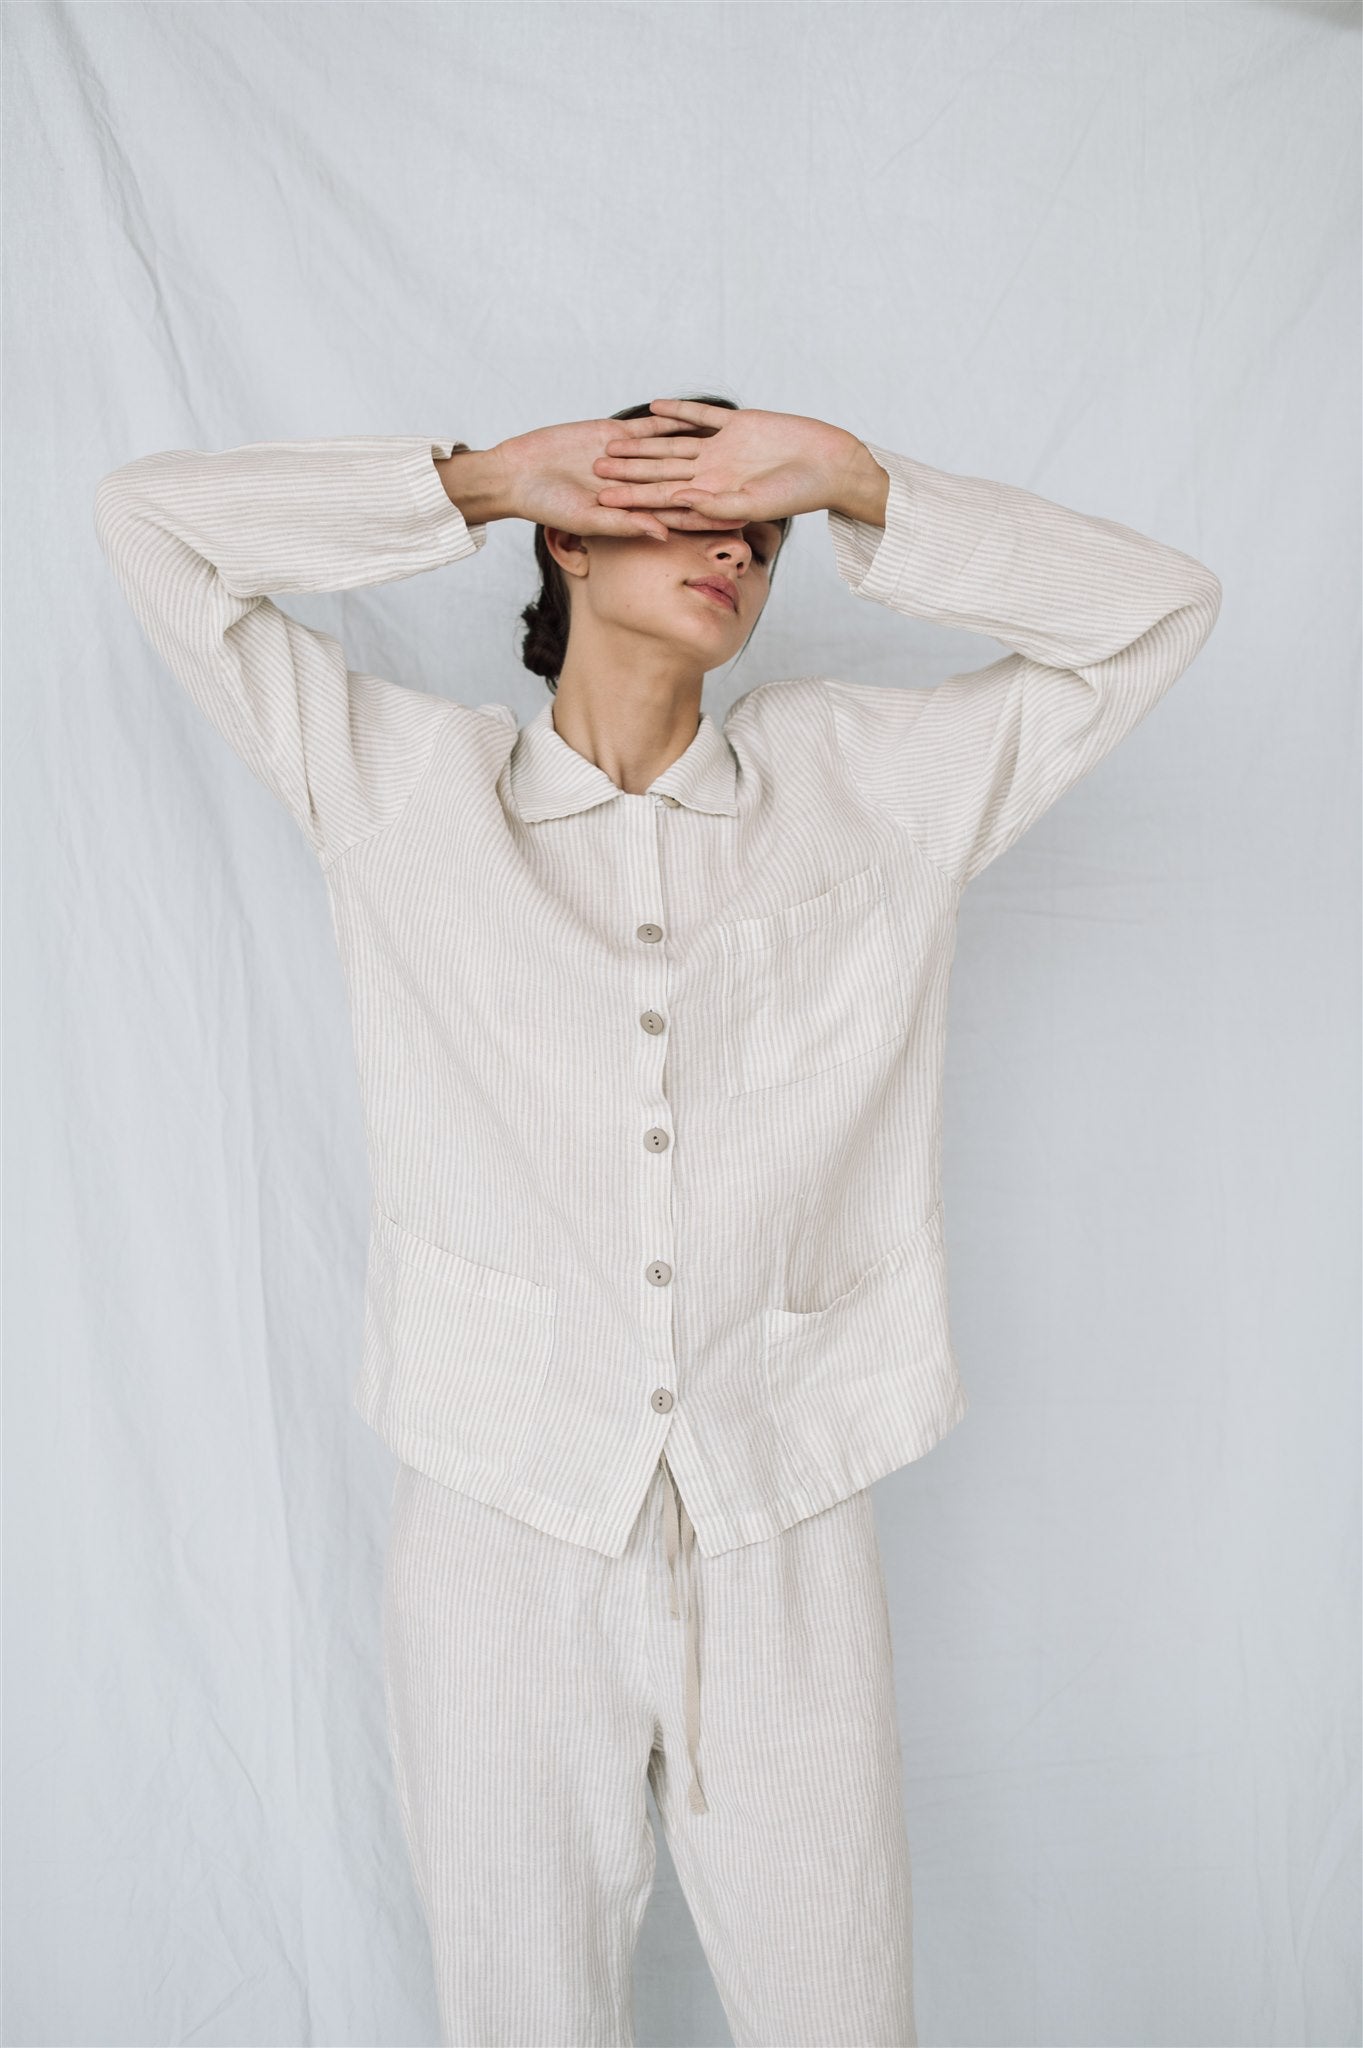 Linen Pajama set JANE in  white stripes